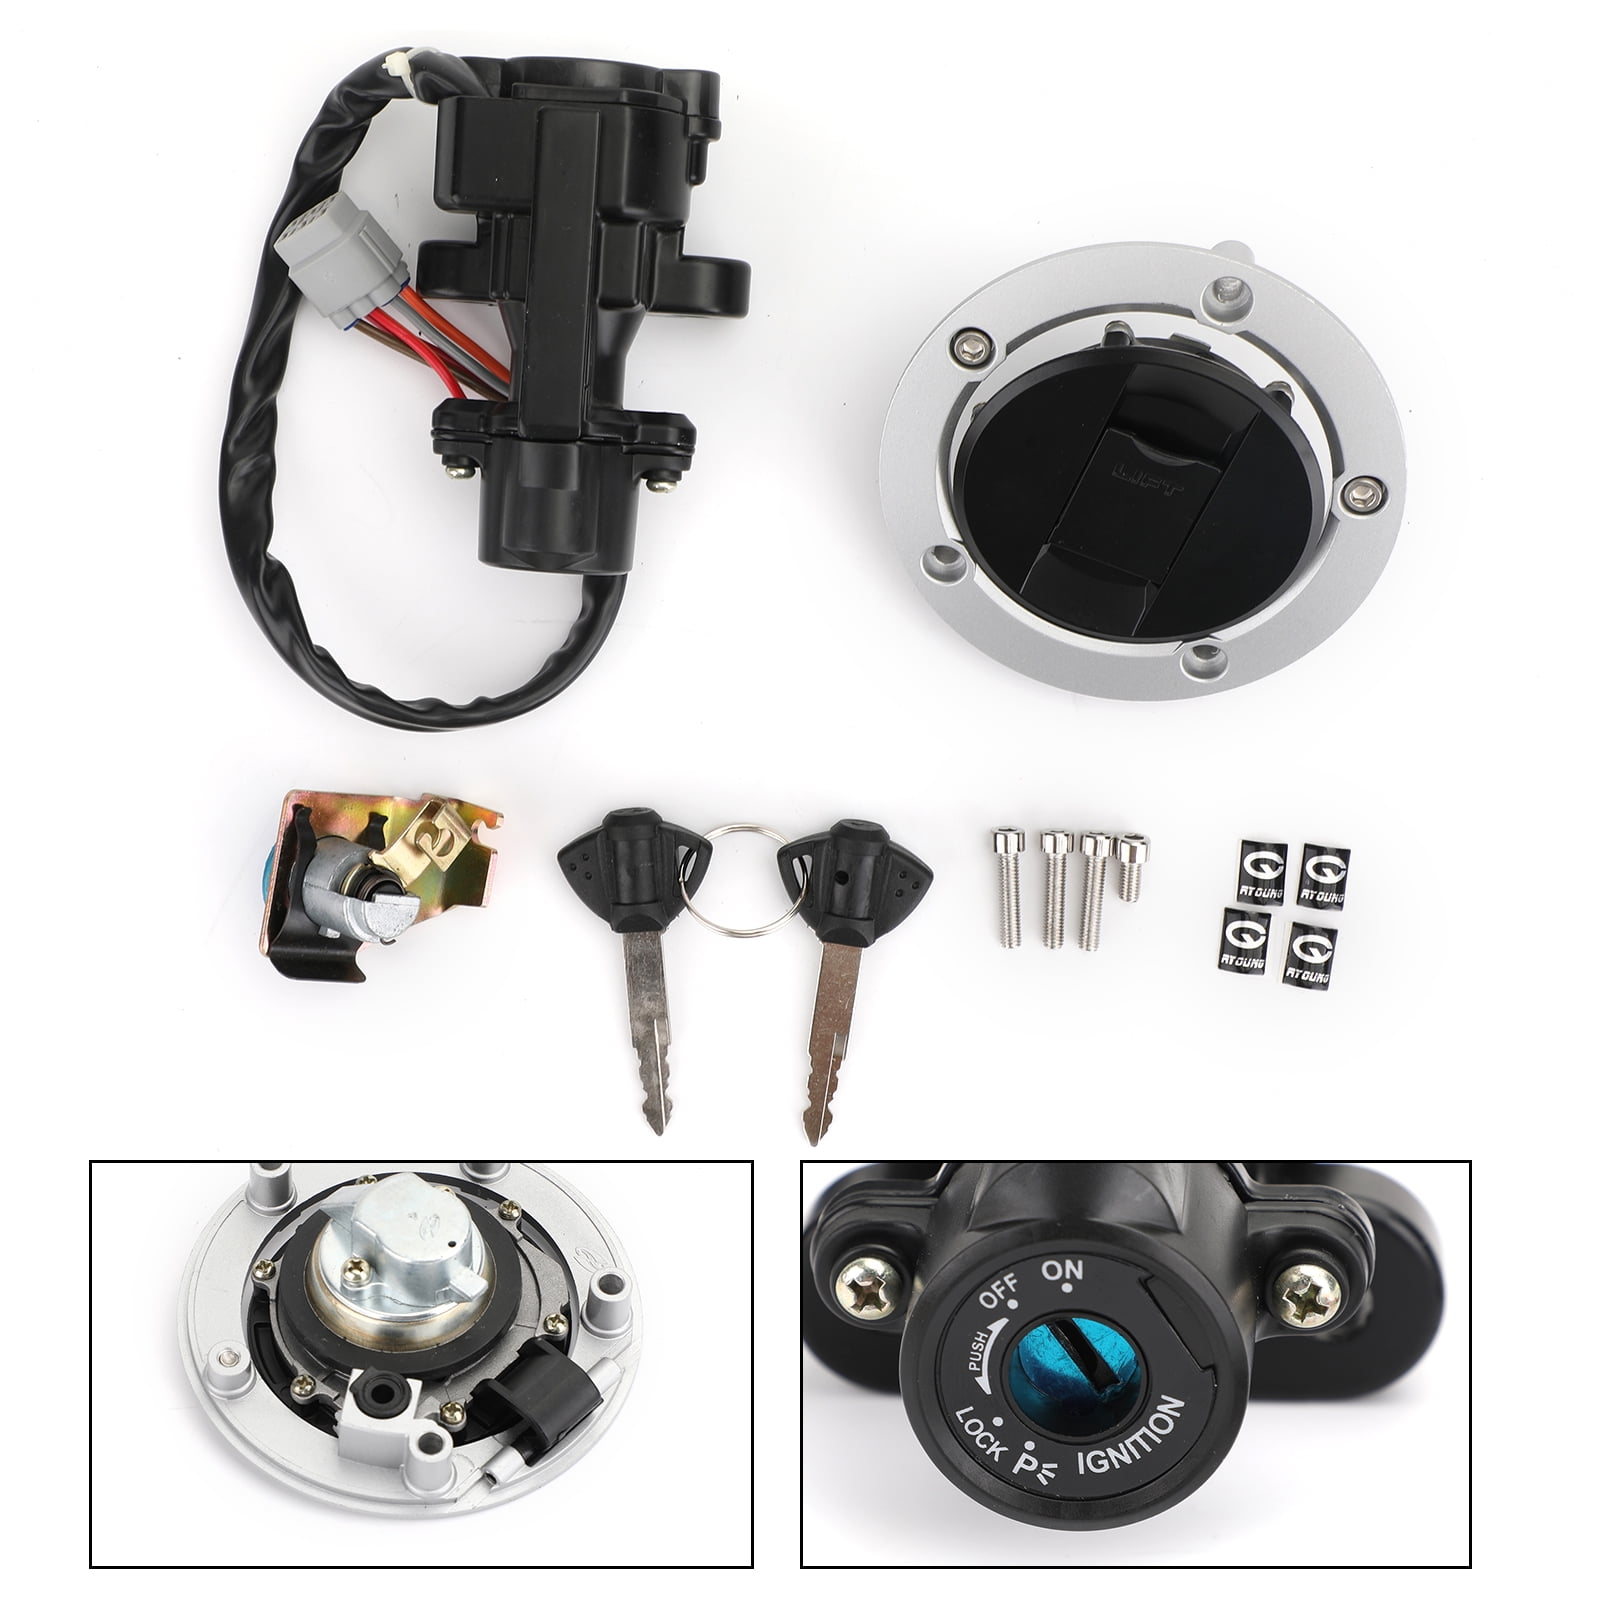 750.1000 Vstrom650.1000 Fuel Gas Ignition Switch Seat Cover Lock Key Kaixinuo Ignition Switch Fuel Gas Lock Key Compatible for Suzuki GSXR600